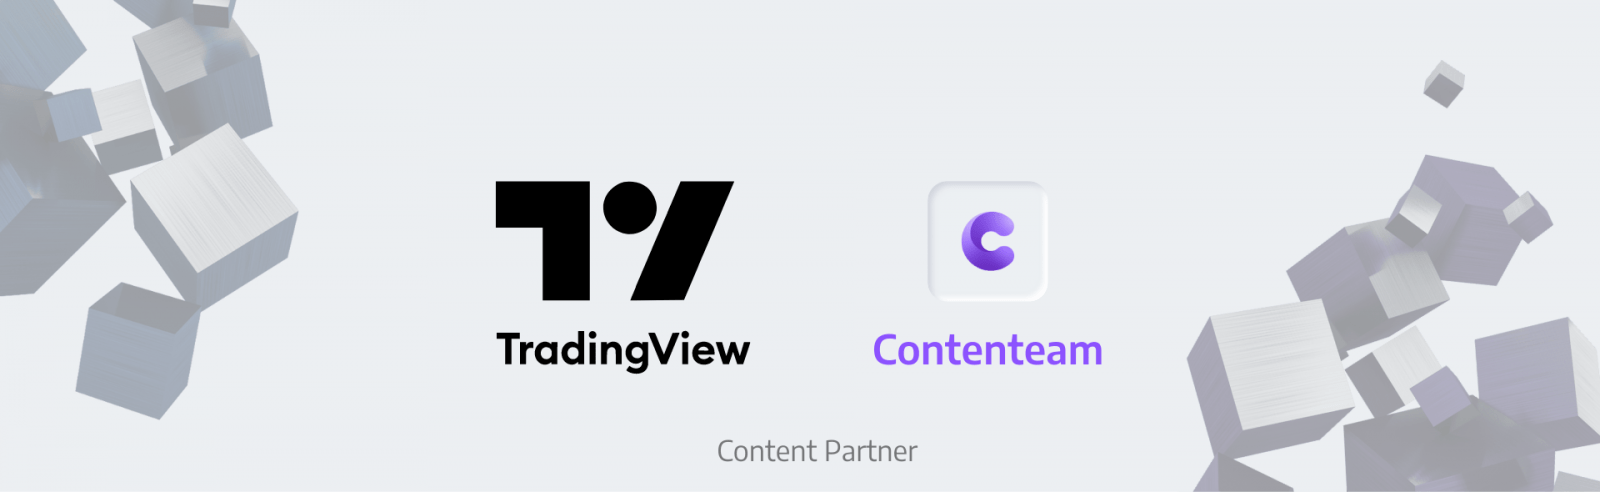 TradingView content partners